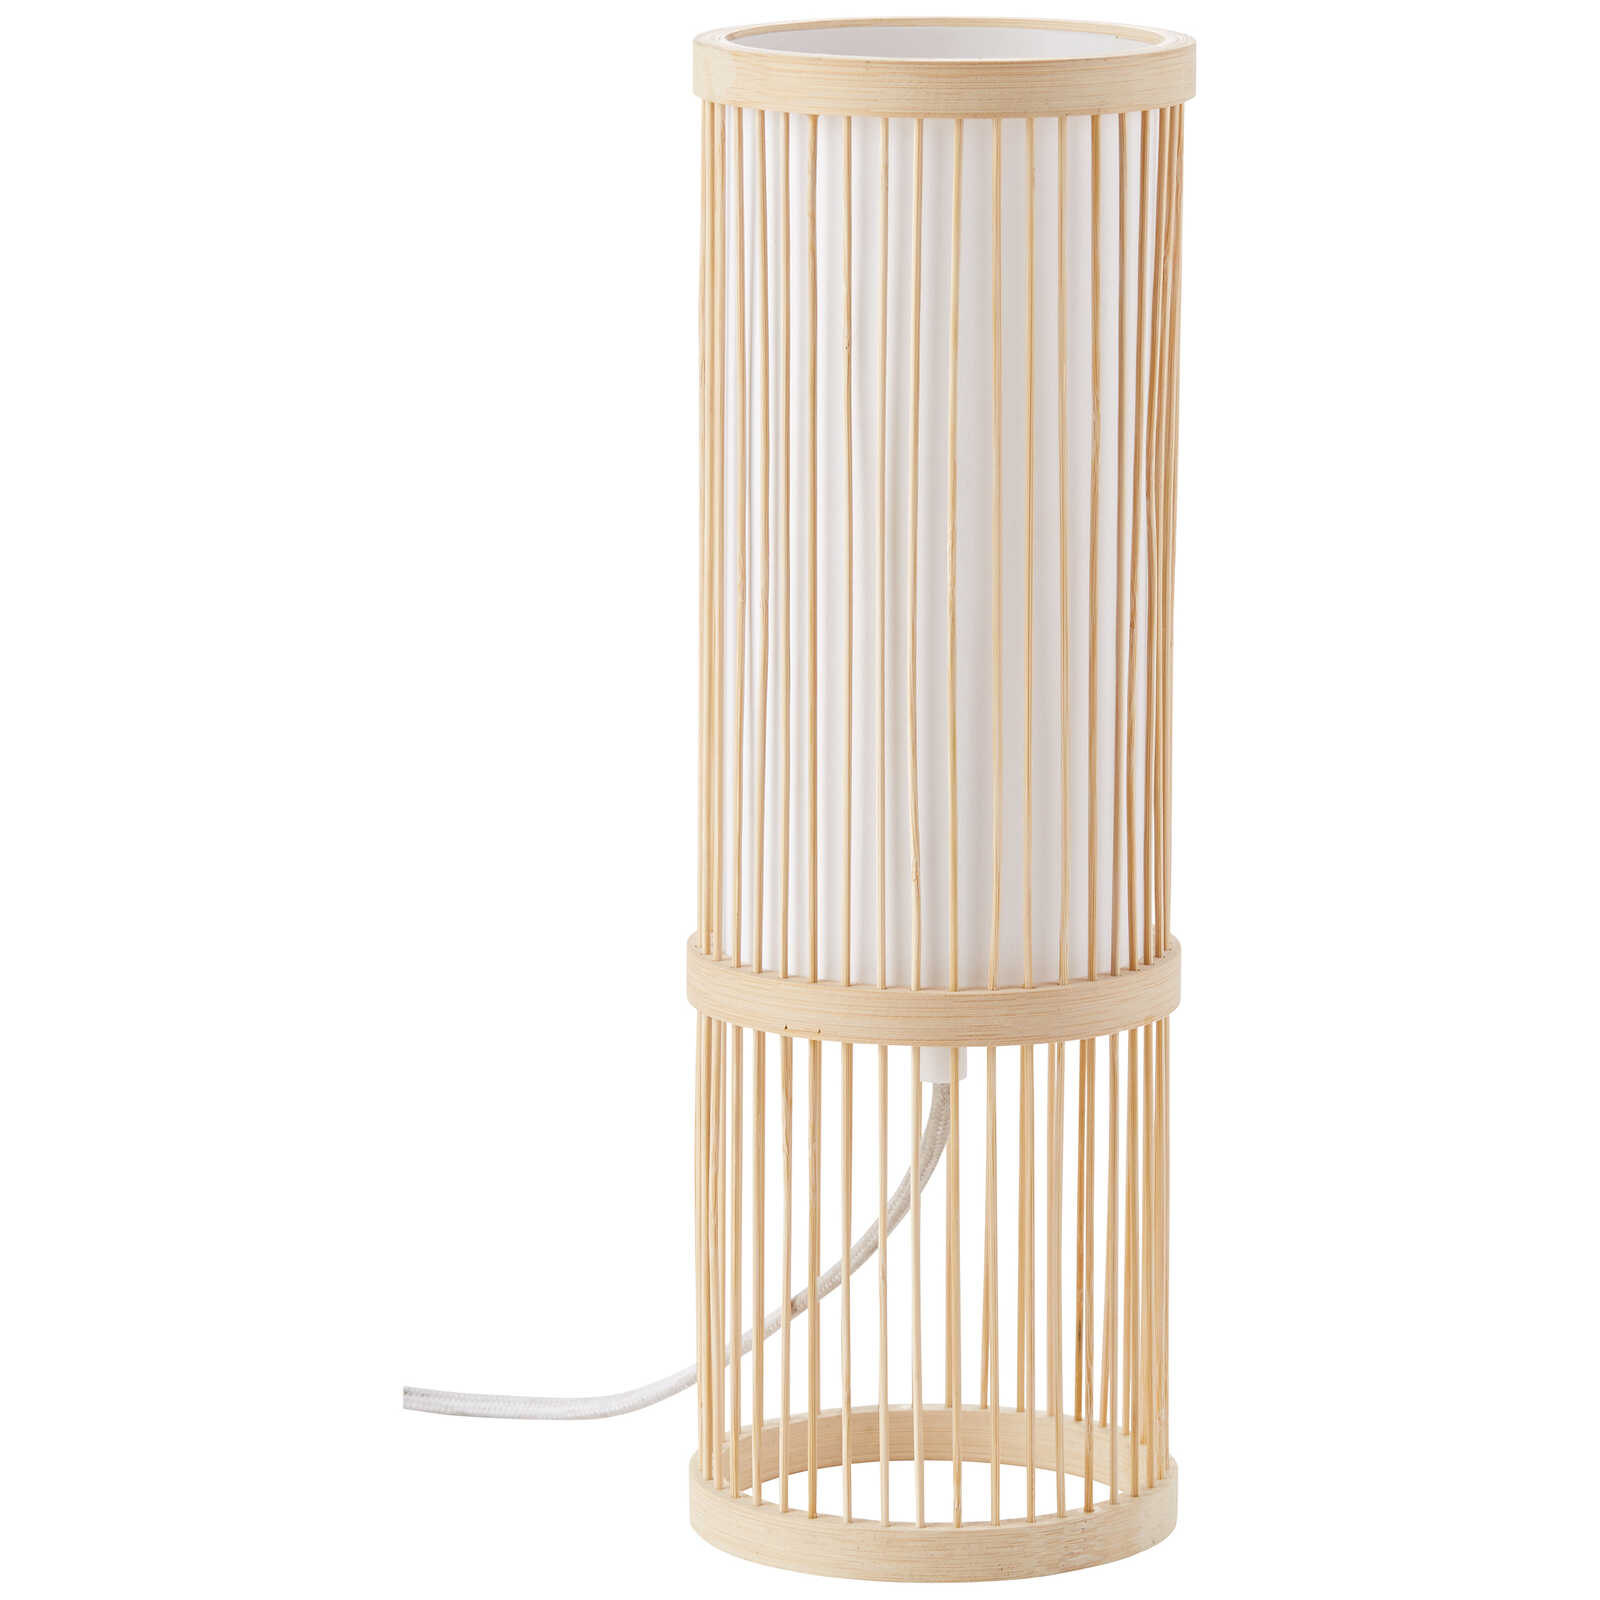             Bamboe tafellamp - Luise 2 - Bruin
        